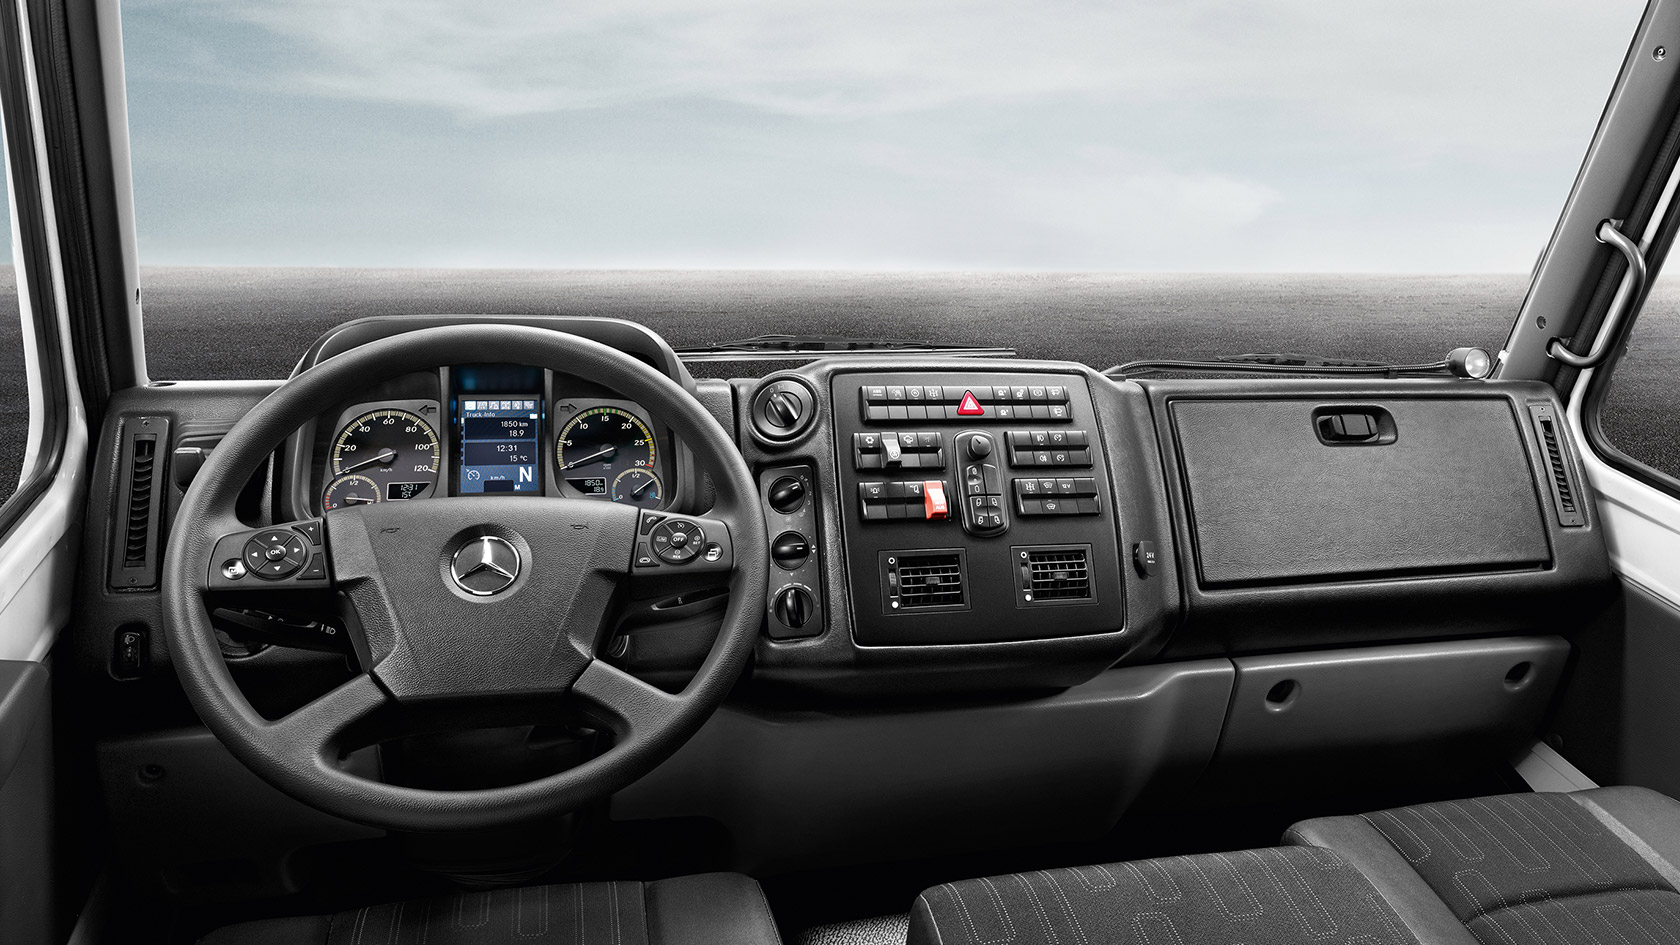 Driven: Mercedes-Benz Unimog Review • Professional Pickup